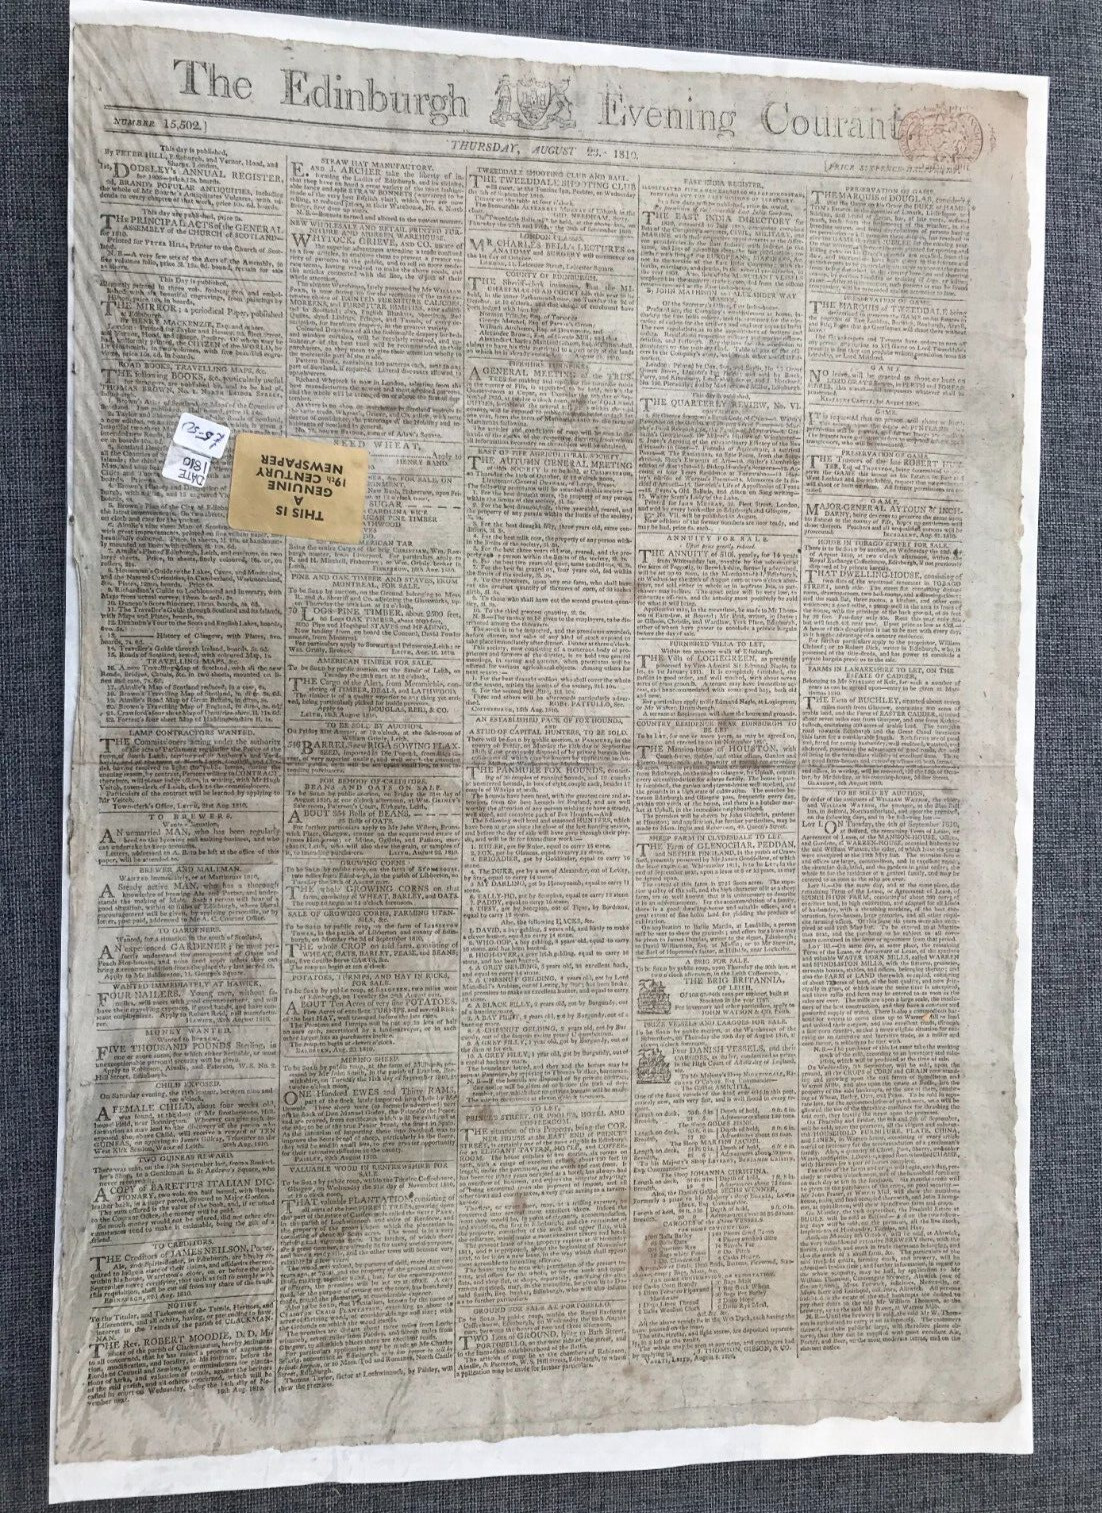 THE EDINBURGH EVENING COURANT 23 AUGUST 1810 ORIGINAL NEWSPAPER